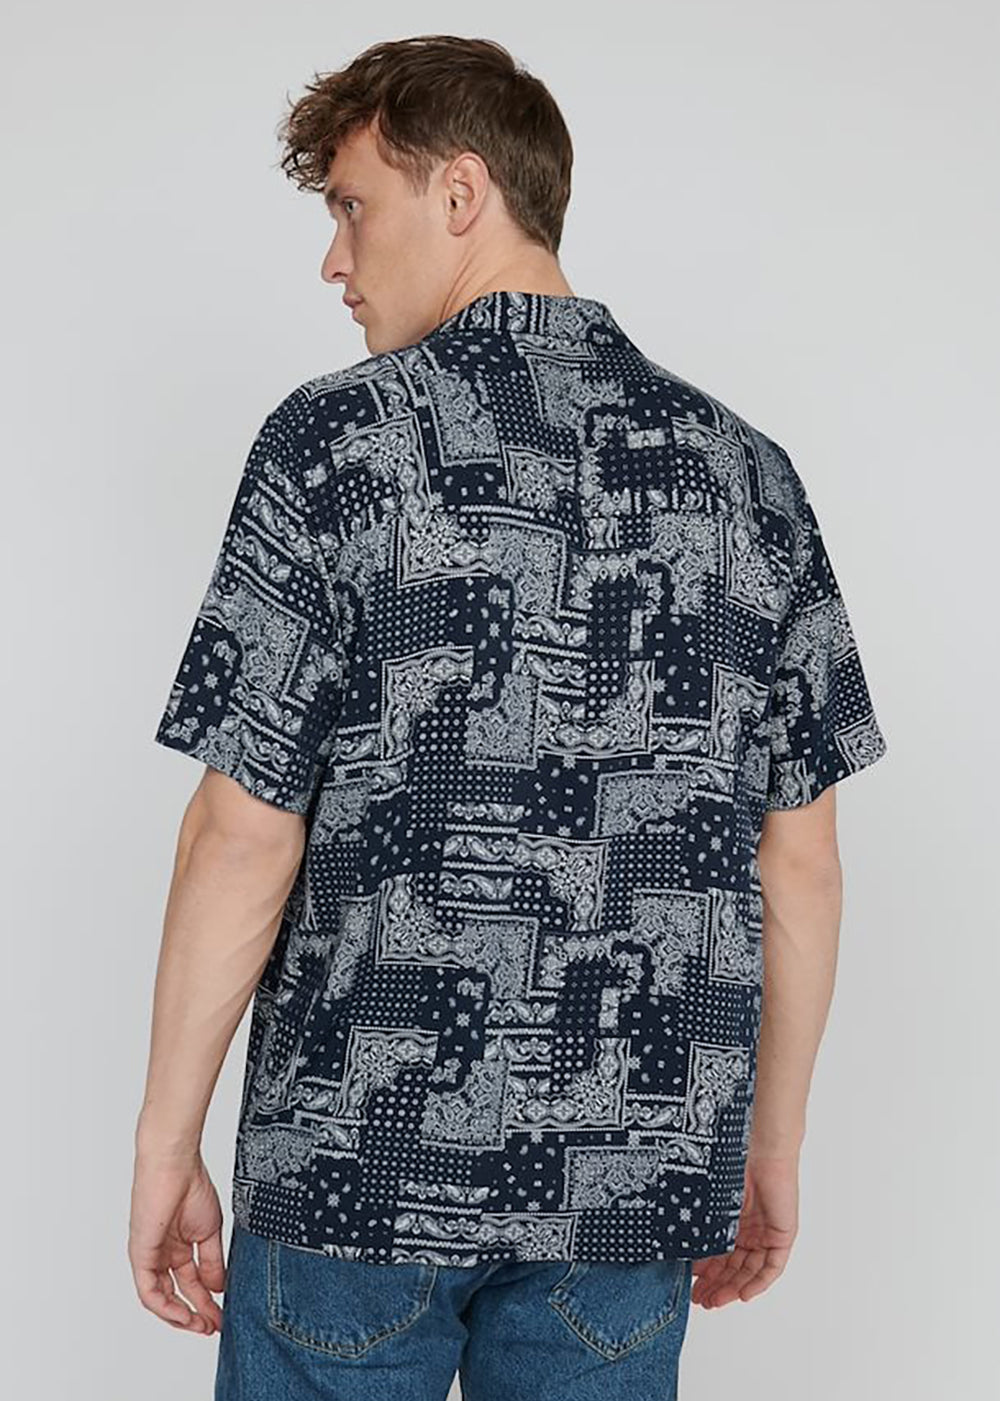 Klampo Short Sleeve Shirt - Dark Navy - Matinique Canada - Danali